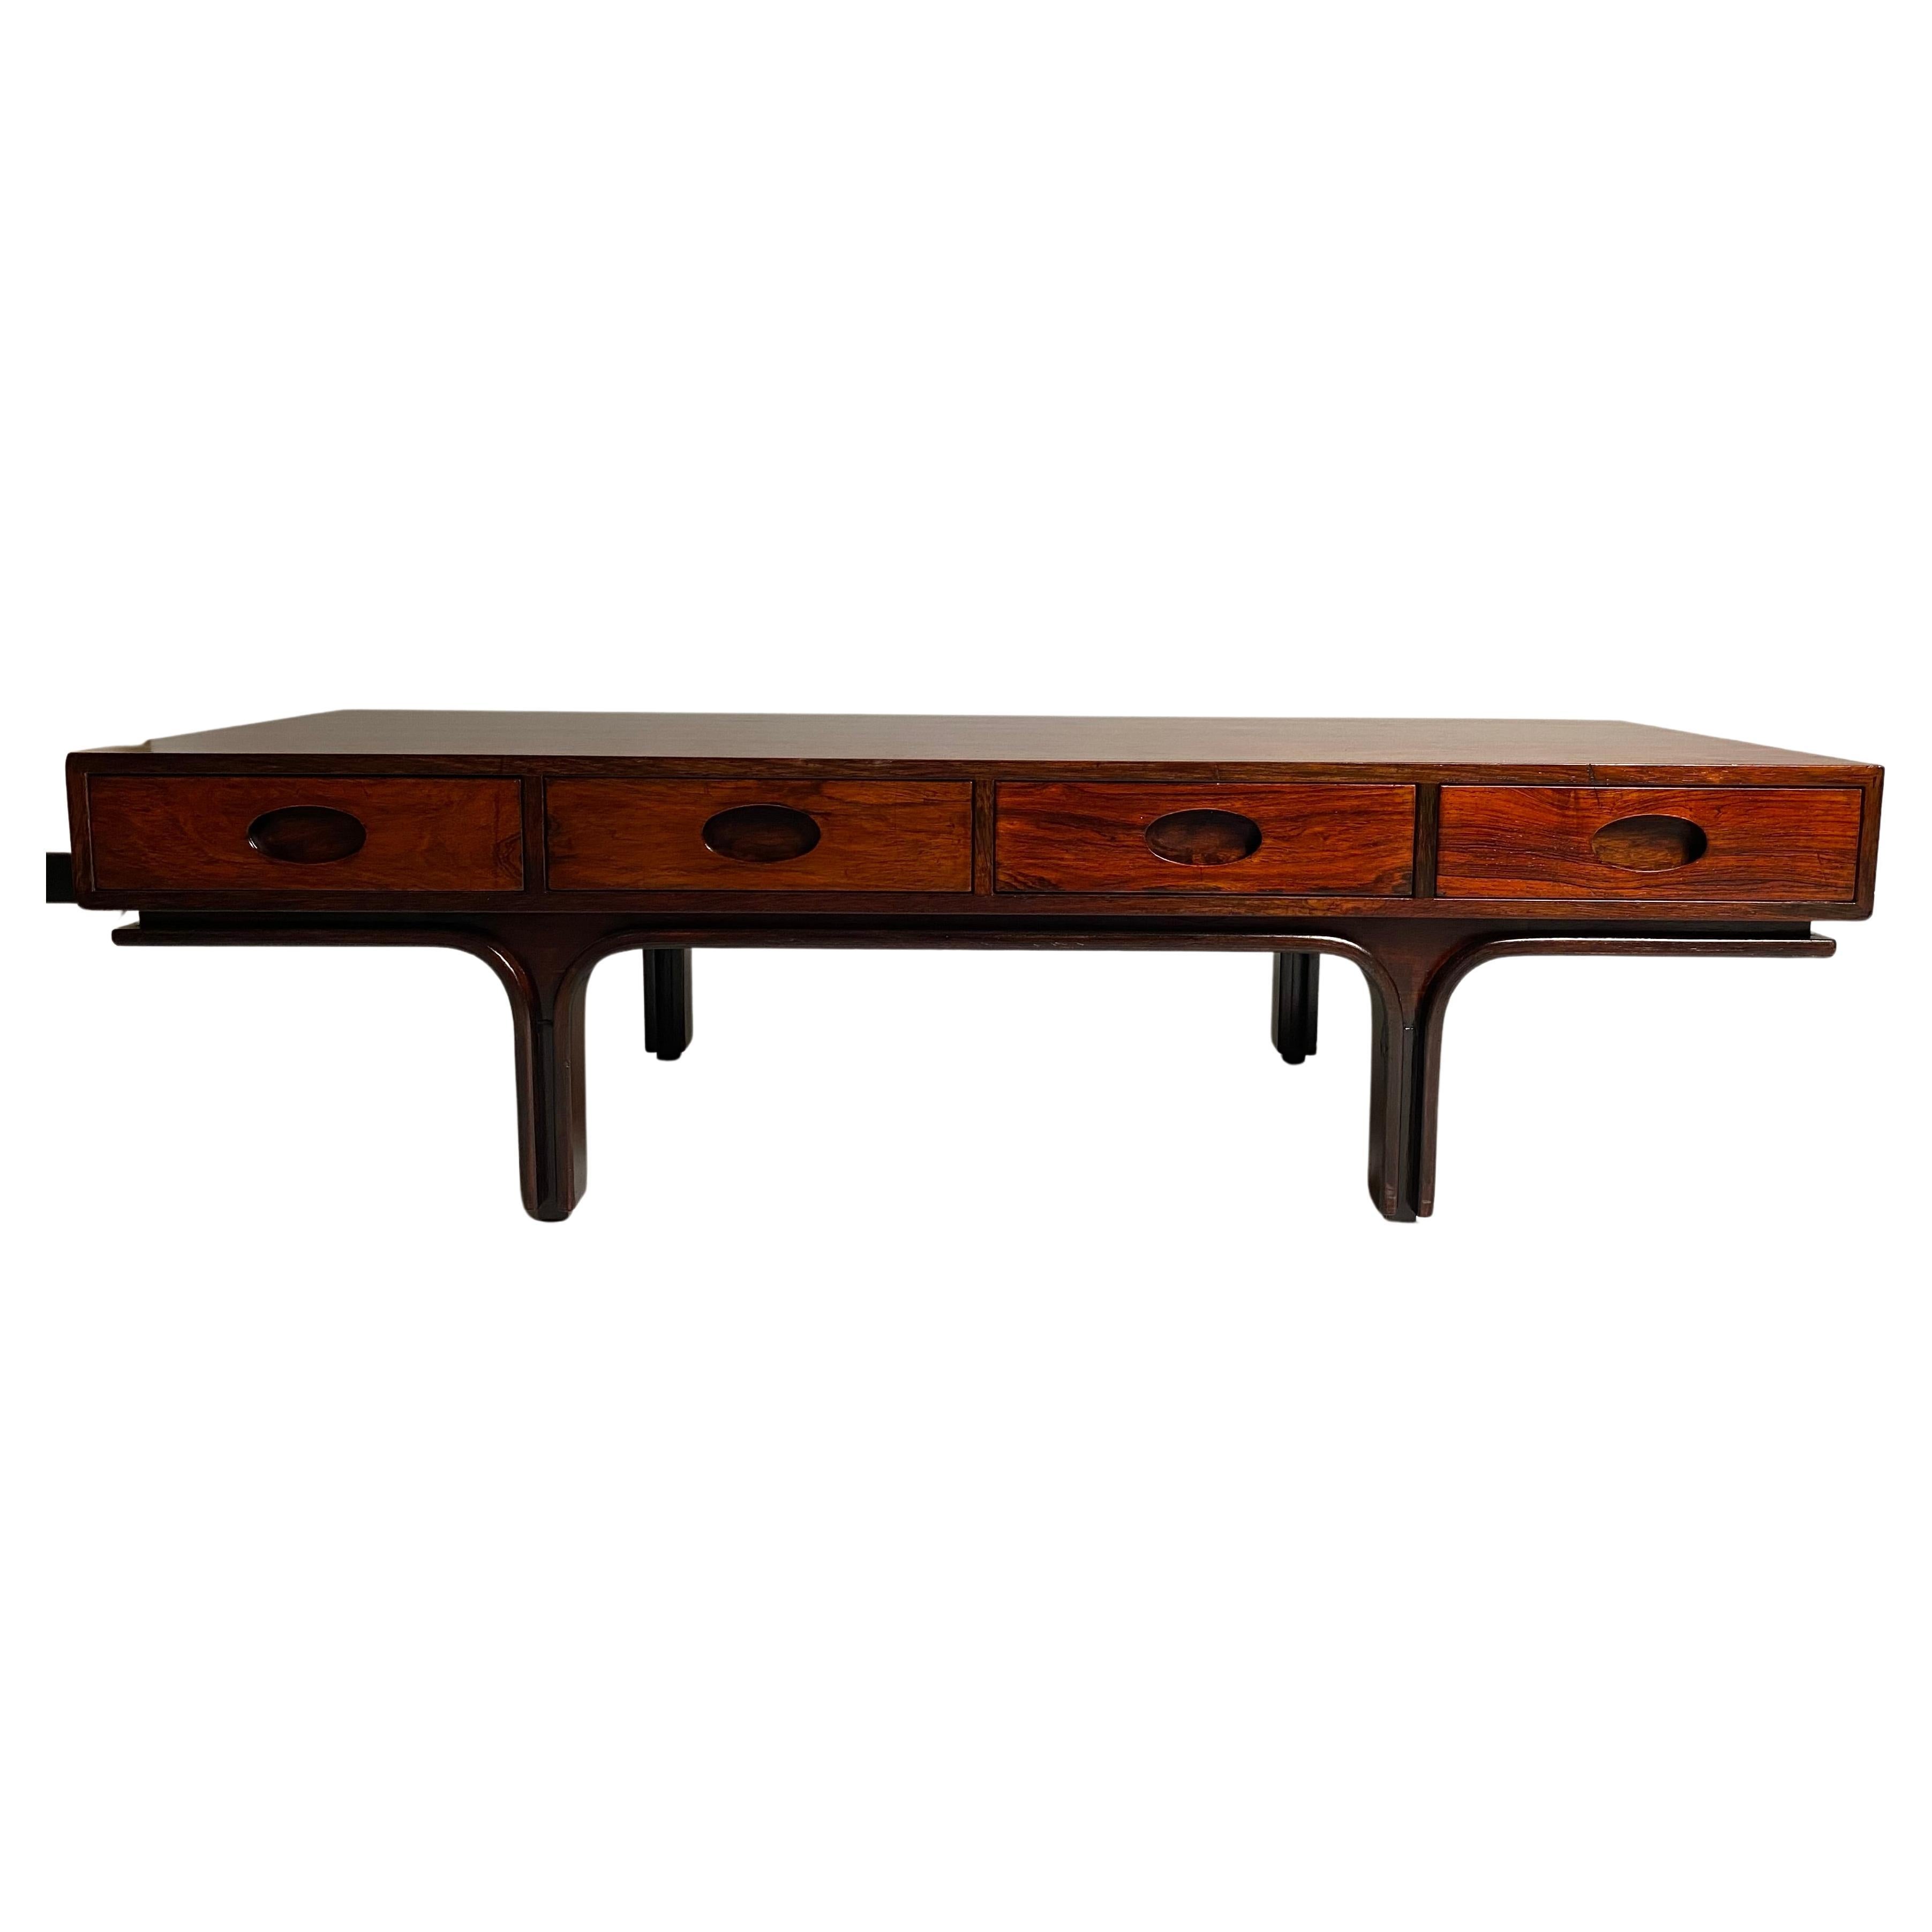 Gianfranco Frattini, wooden coffe table for Bernini, 1960s For Sale